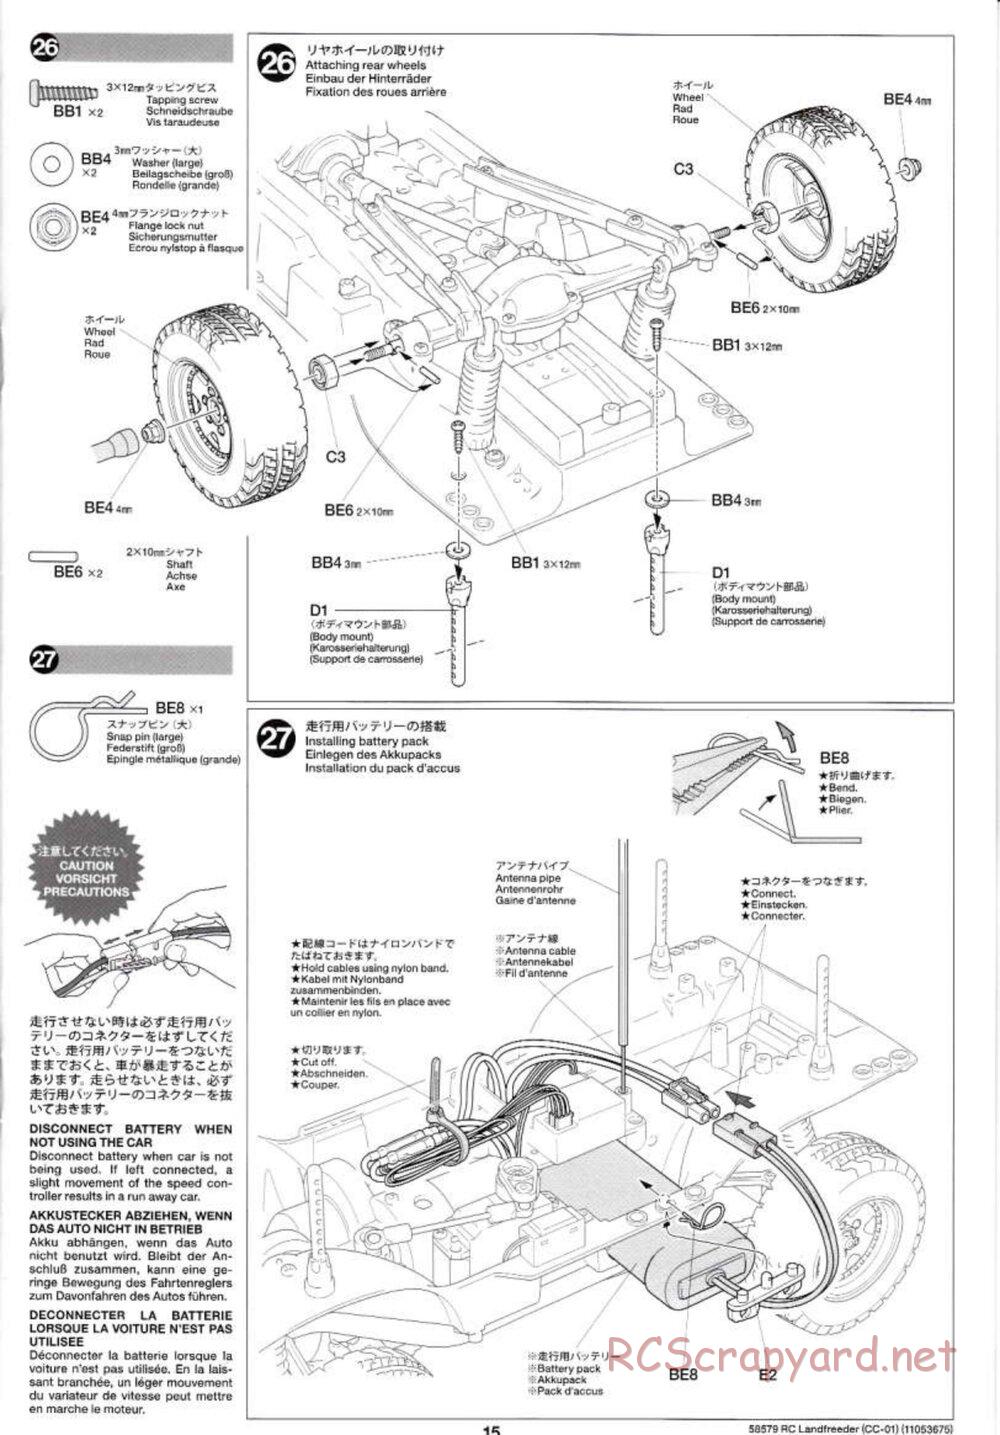 Tamiya - LandFreeder - CC-01 Chassis - Manual - Page 15